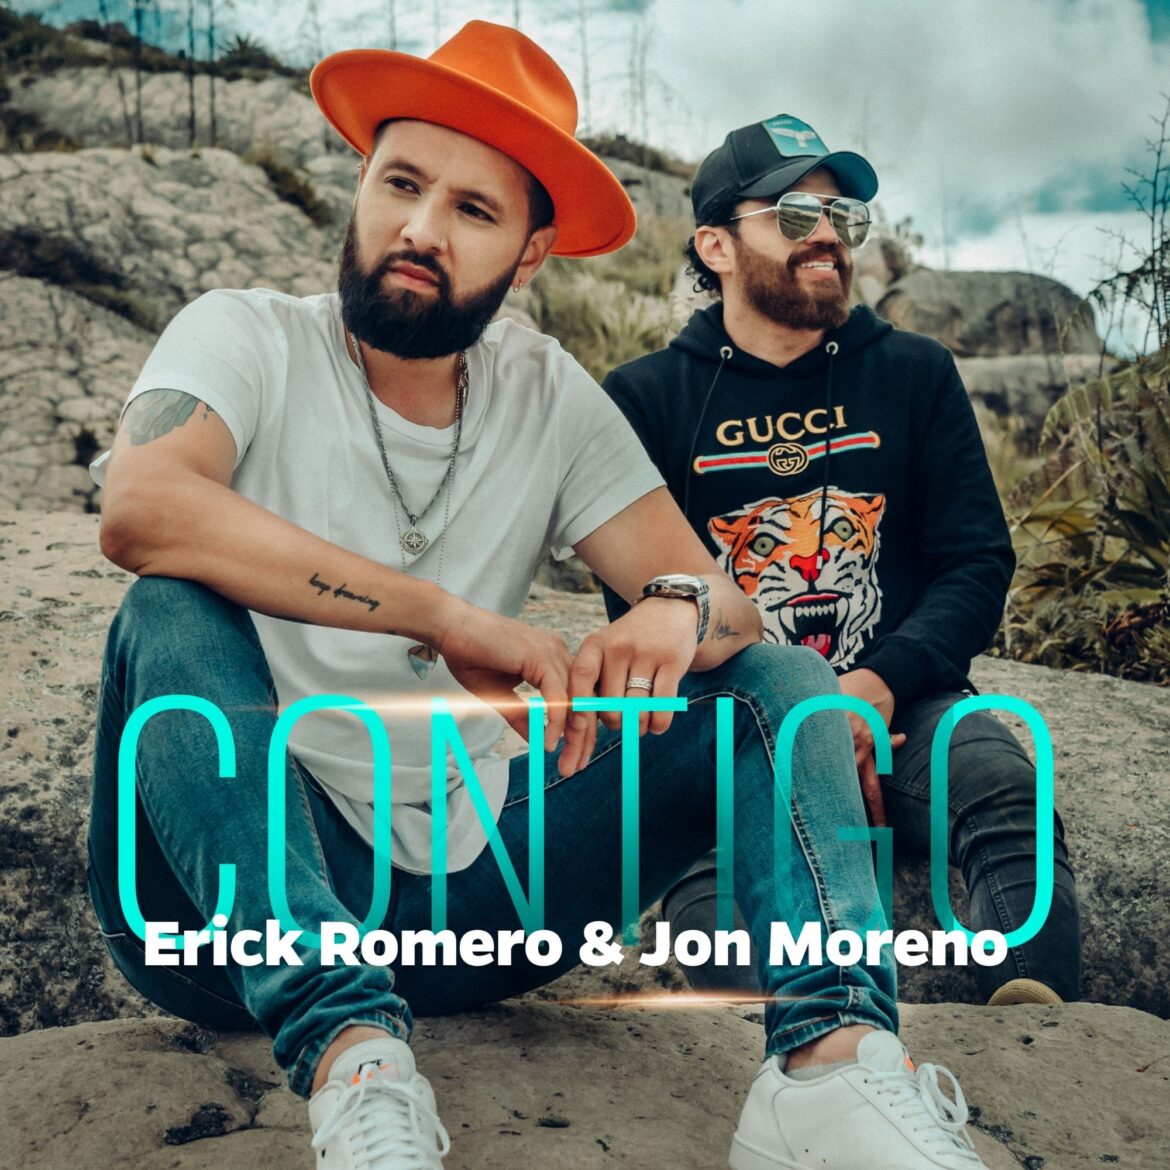 El  talentoso cantautor colombiano Erick Romero presenta su sencillo musical titulado “Contigo” junto a Jon Moreno